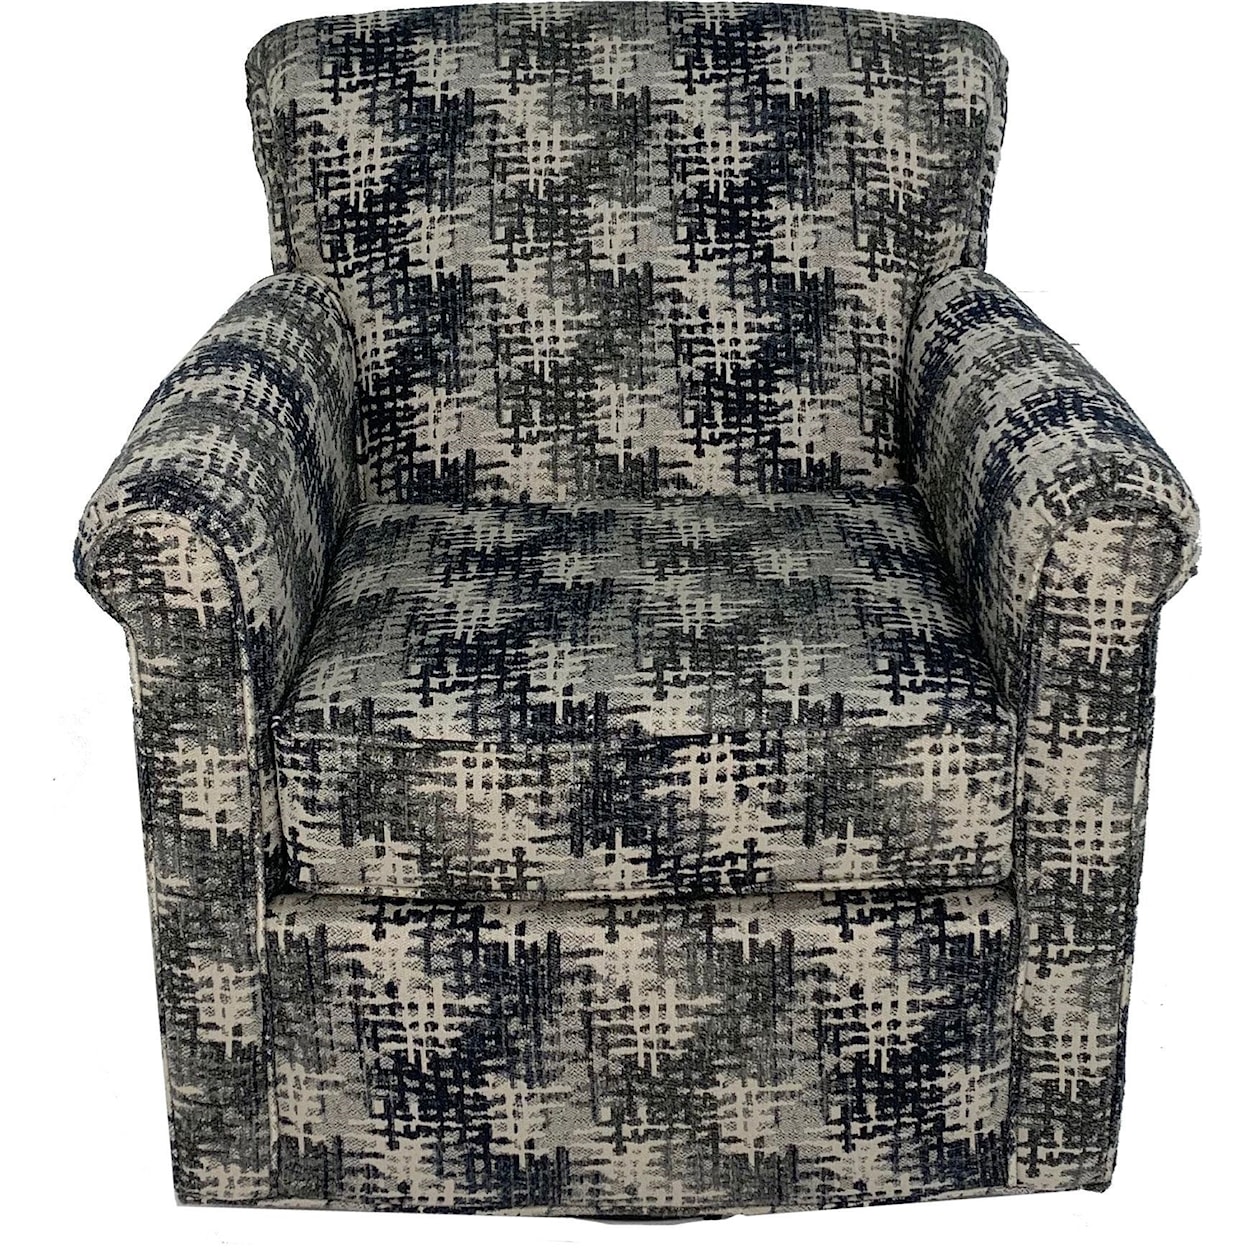 Alexvale V3C0 Swivel Chair